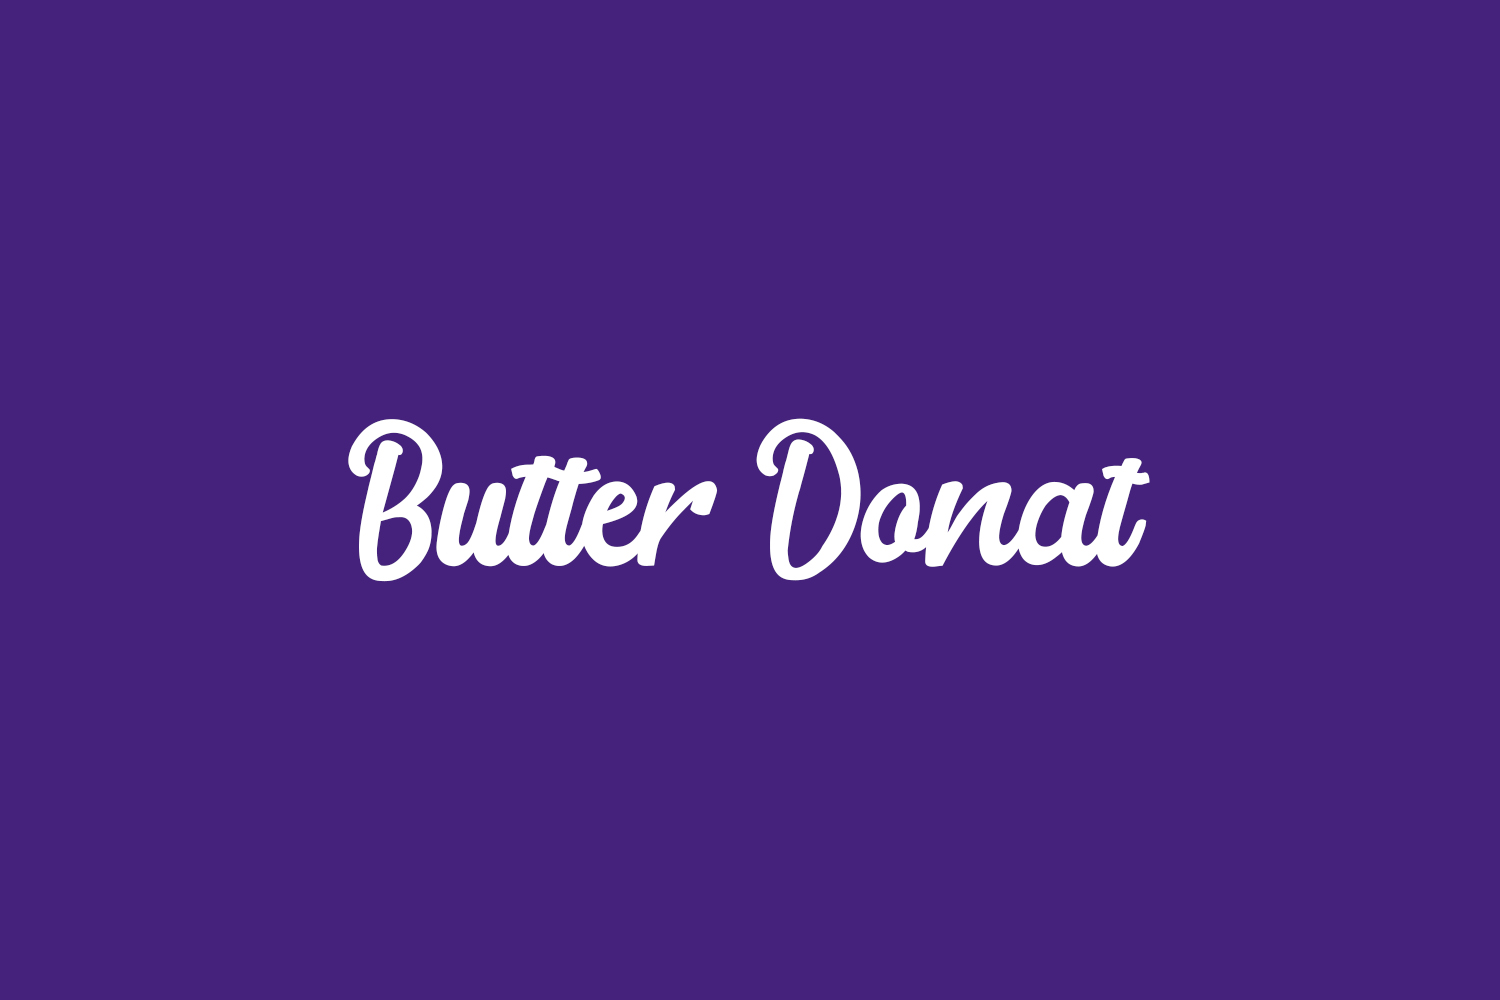 Butter Donat Free Font